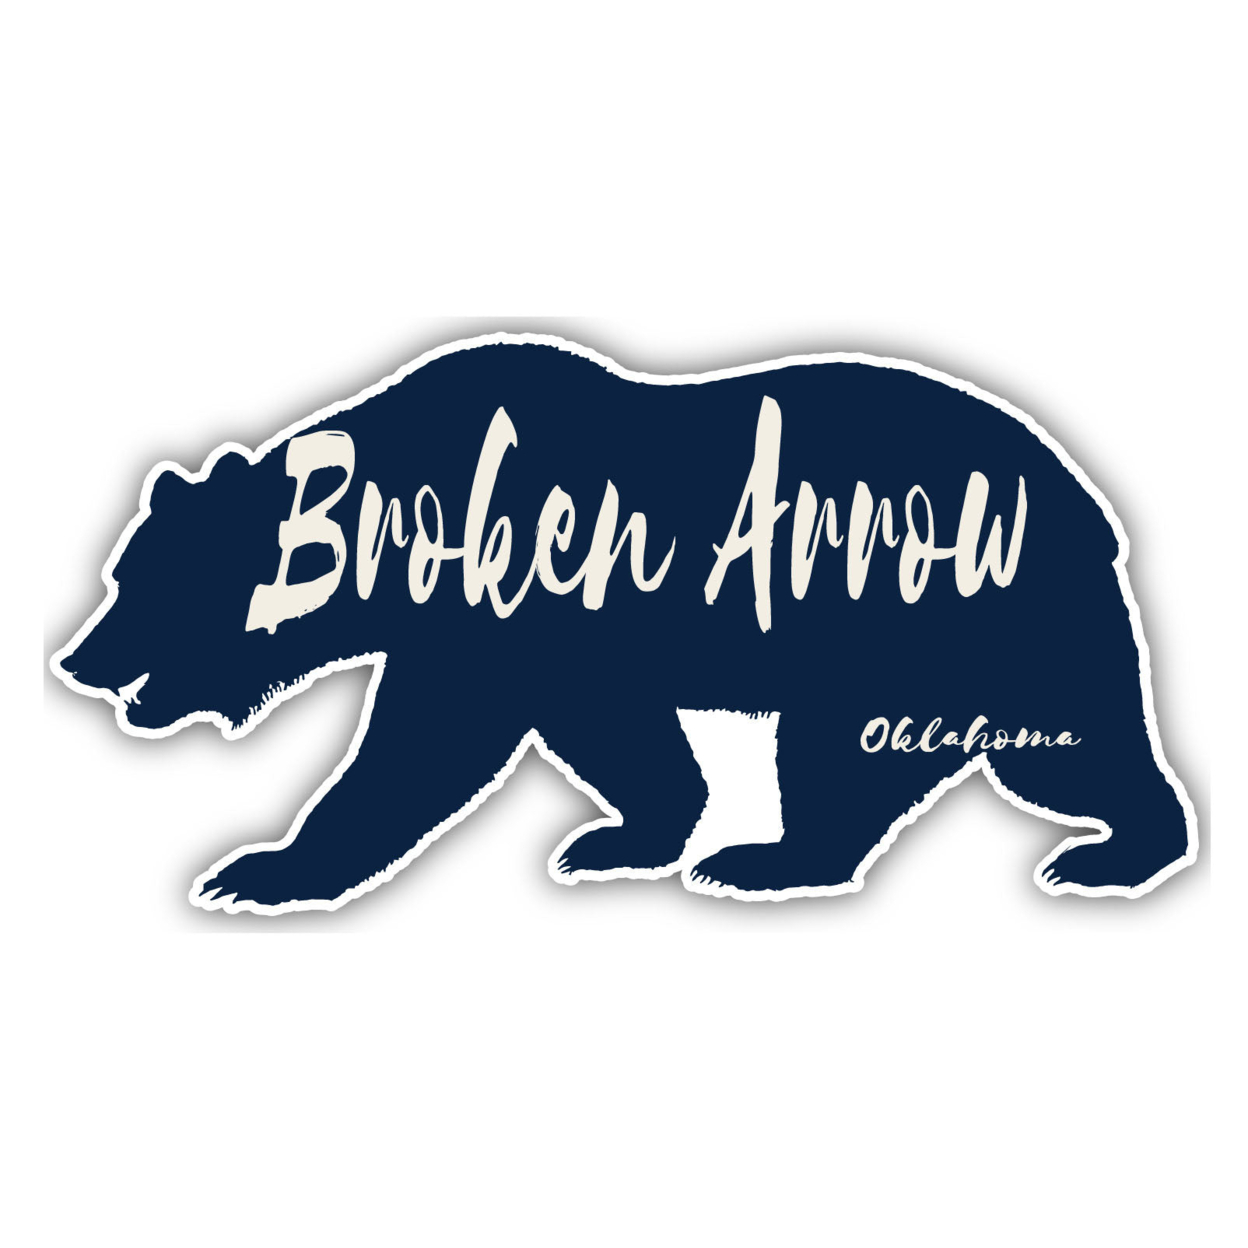 Broken Arrow Oklahoma Souvenir Decorative Stickers (Choose Theme And Size) - Single Unit, 4-Inch, Great Outdoors